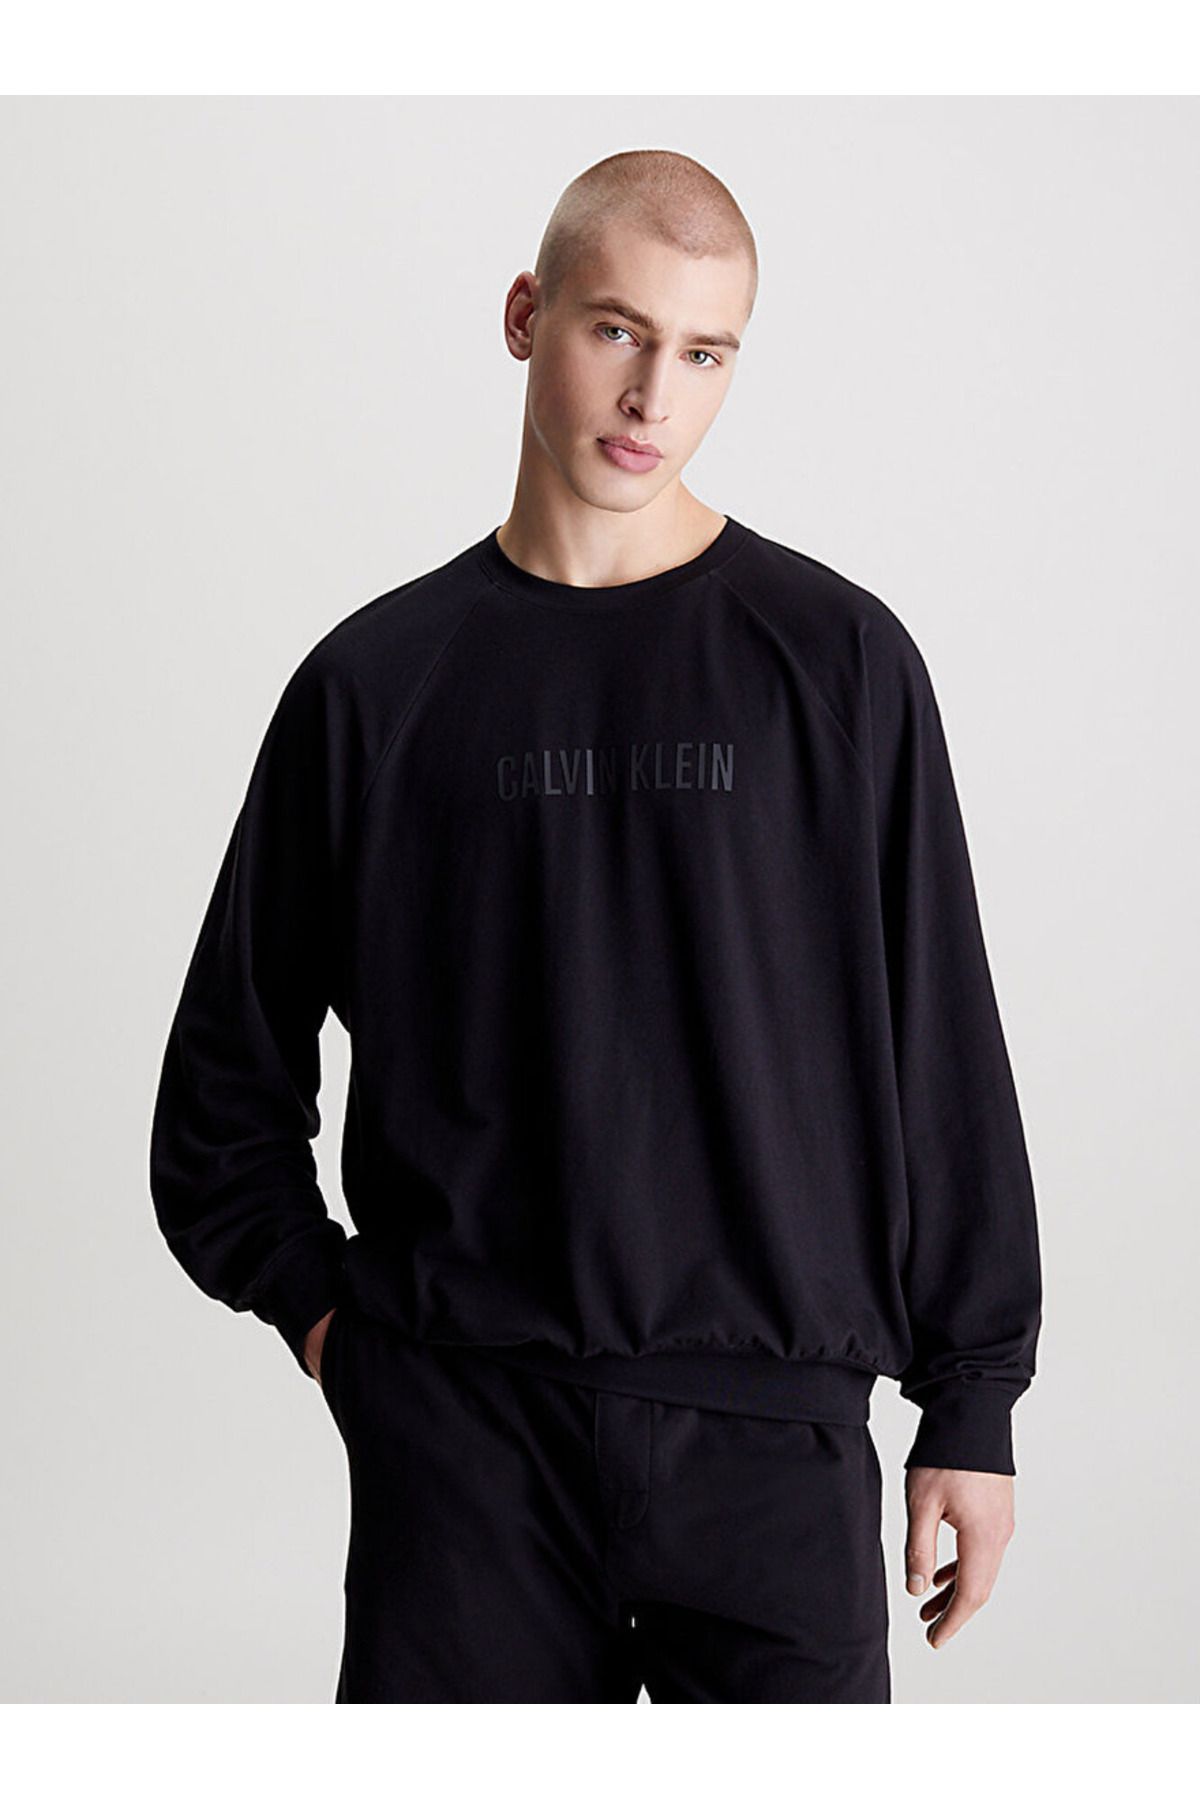 Calvin Klein Lounge Sweatshirt - Intense Power